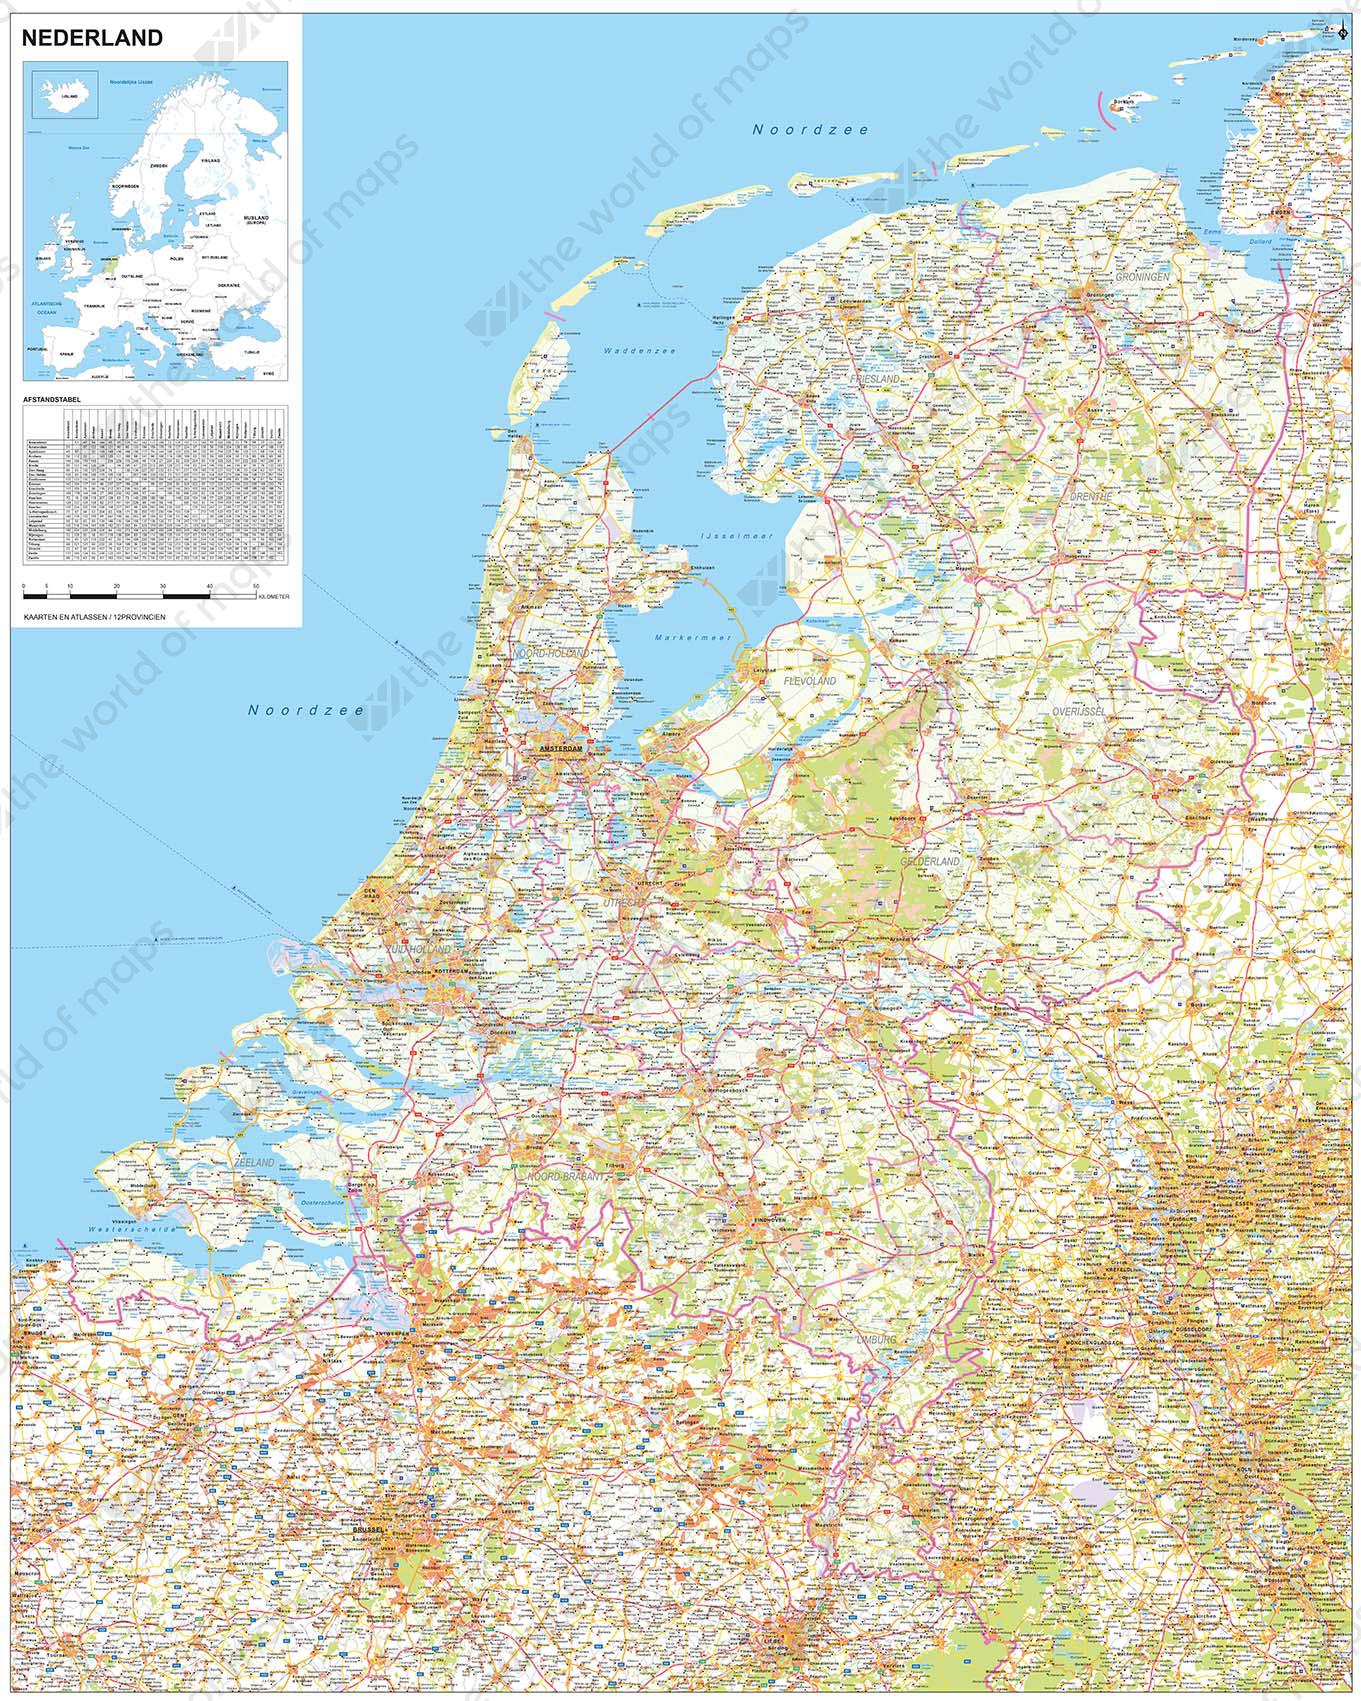 Kapel Mm Trek Digital Map Of The Netherlands 1378 | The World of Maps.com